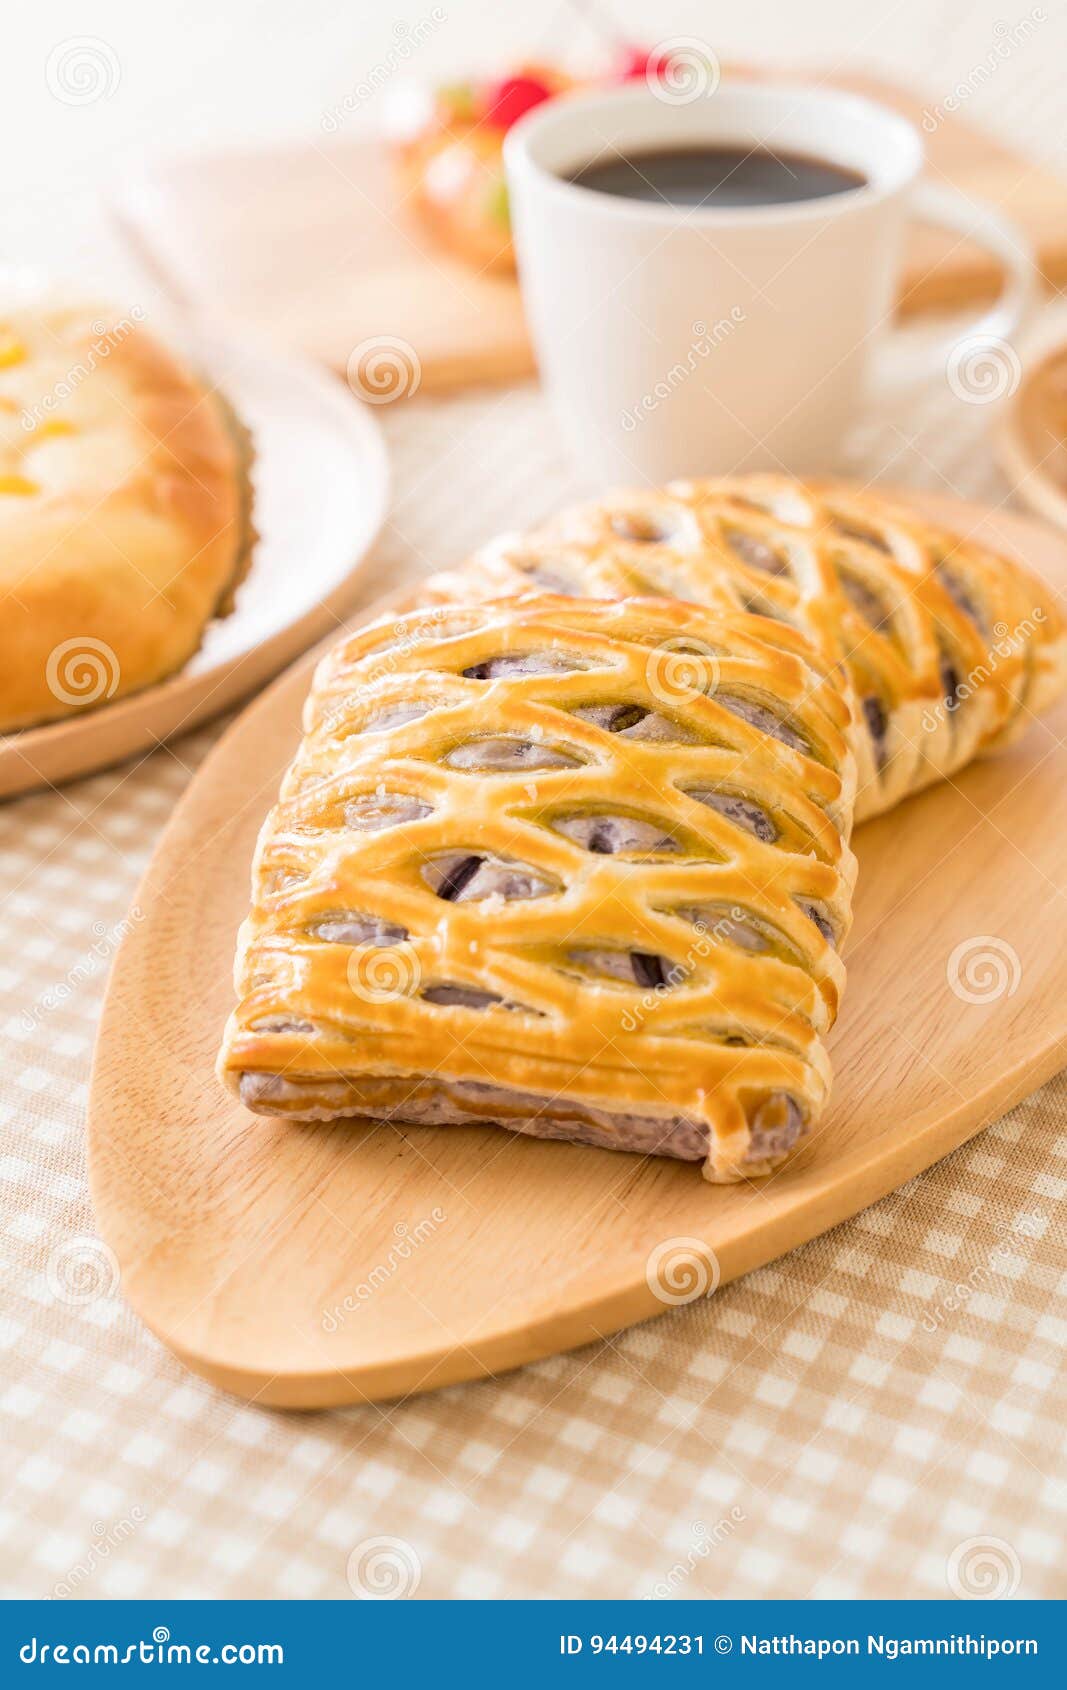 Taro pies on table stock image. Image of breakfast, fresh - 94494231